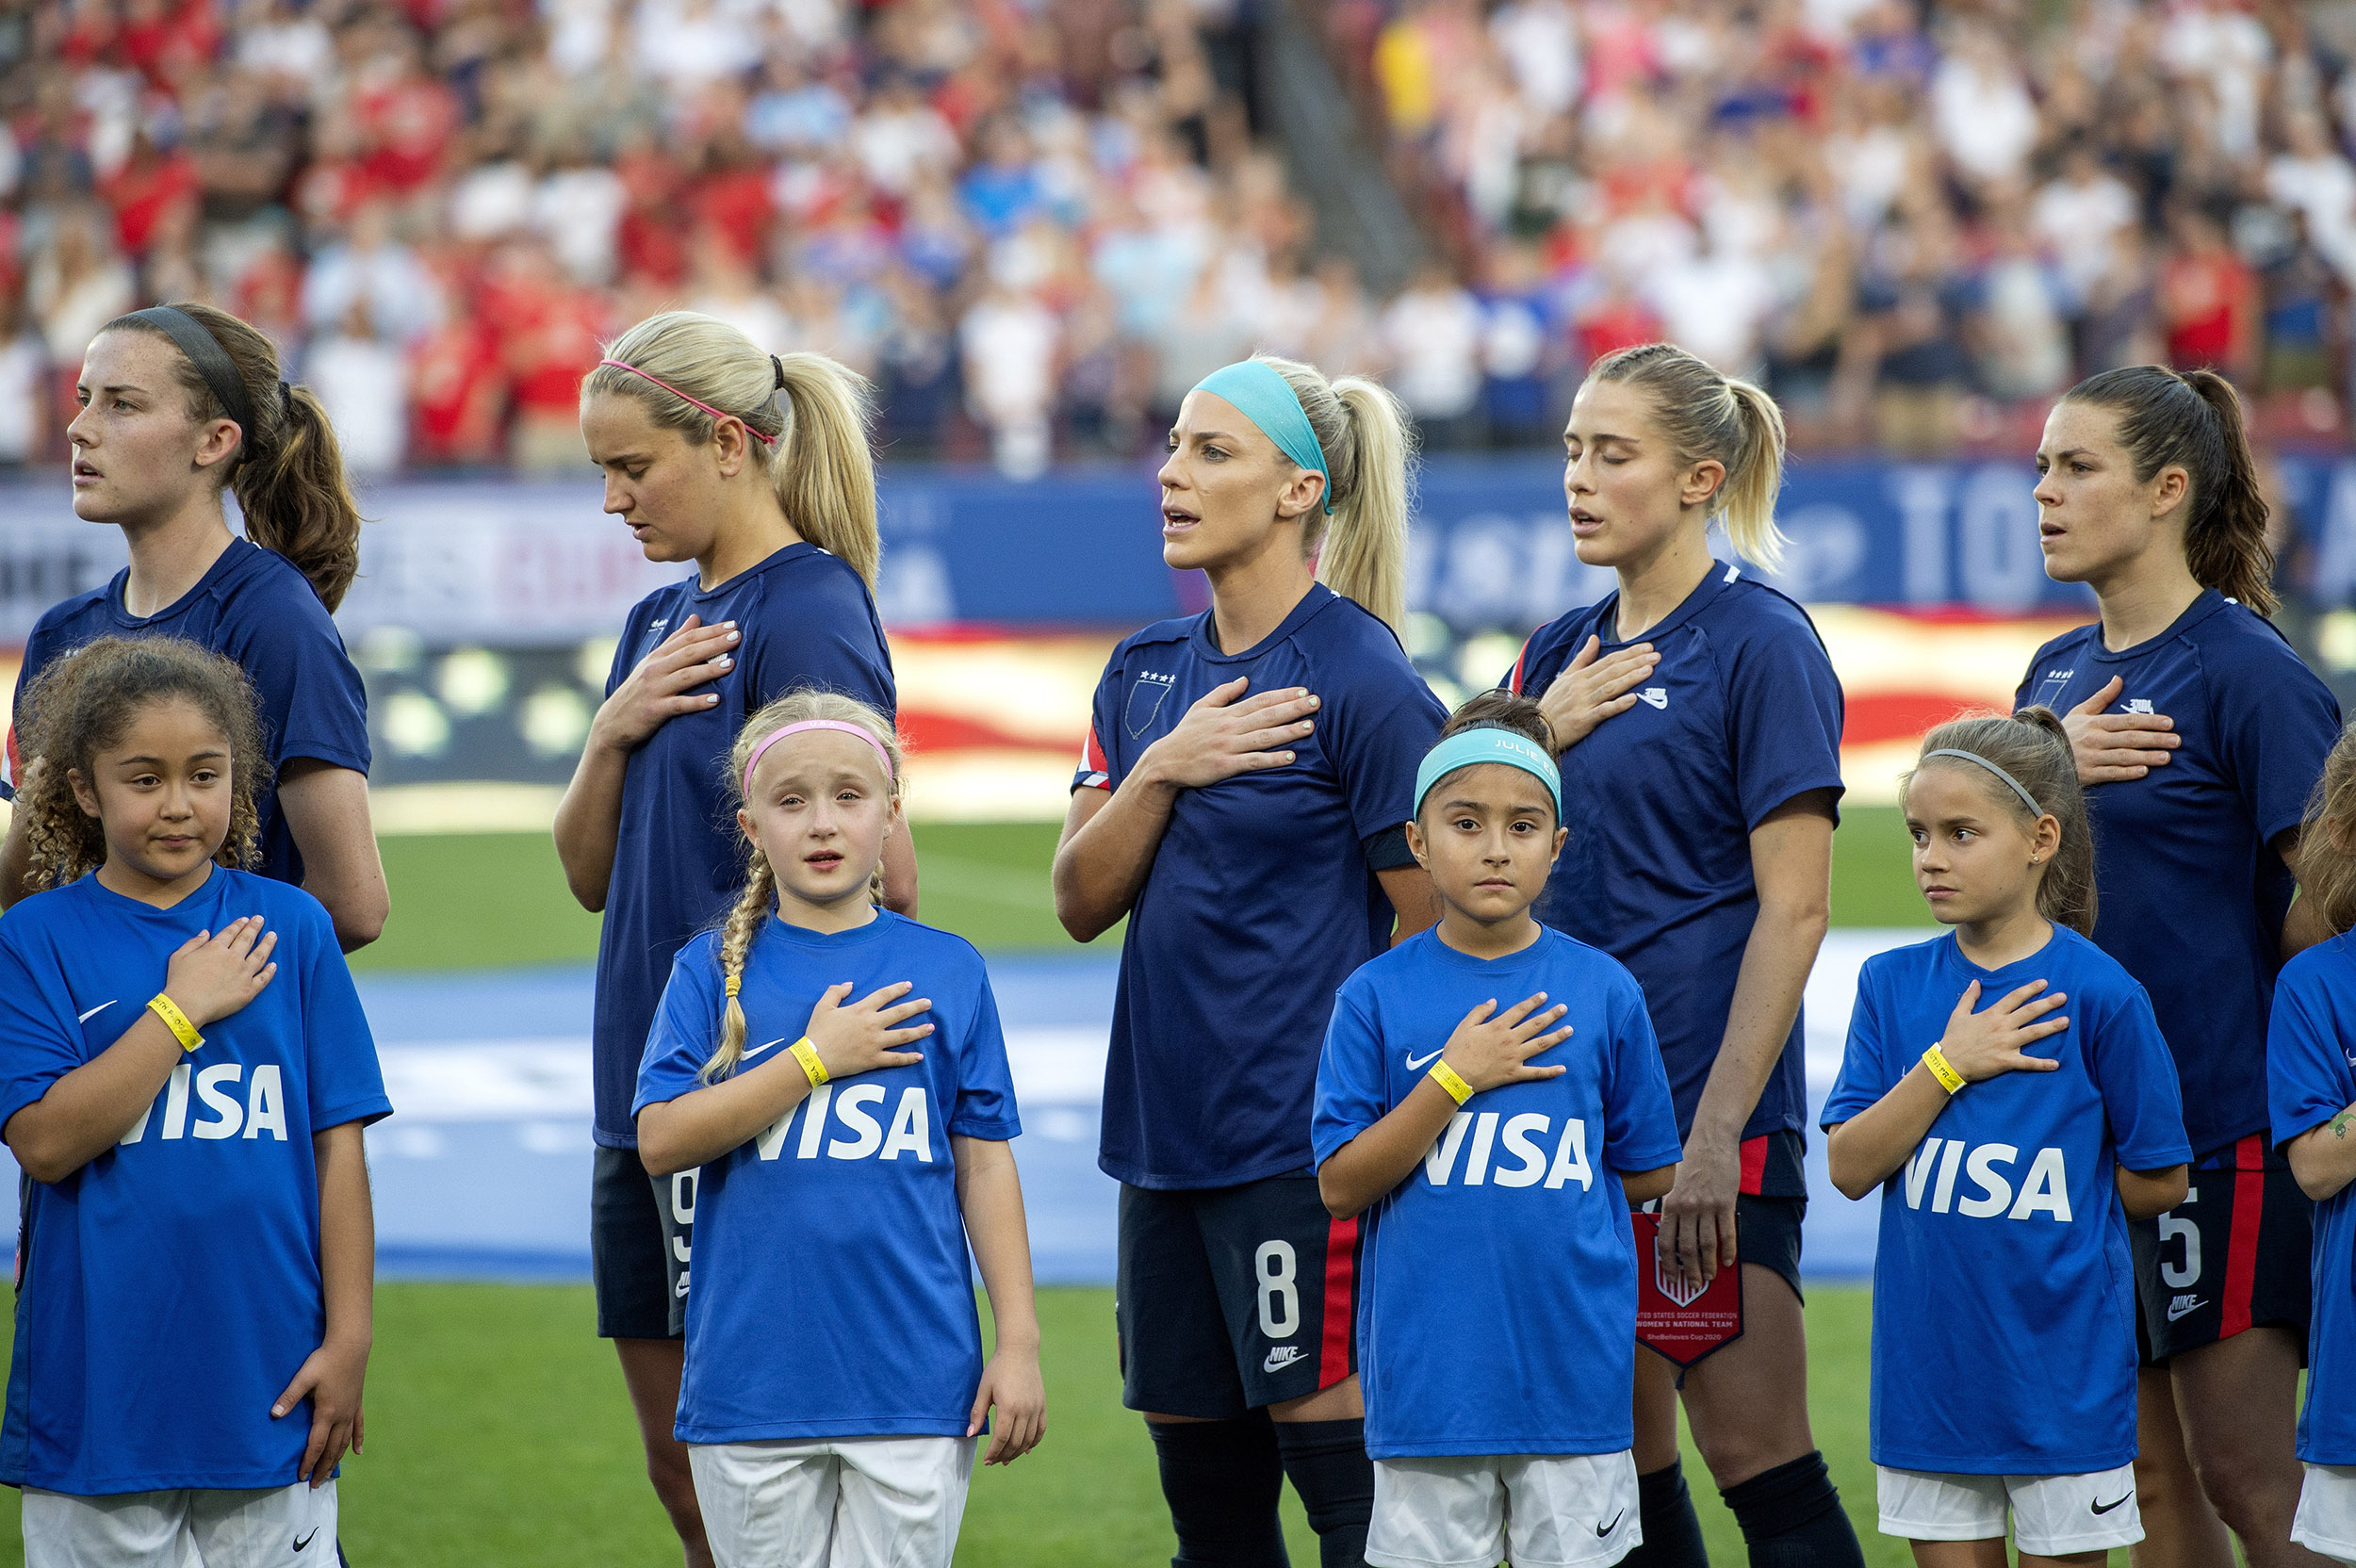 Women's national team hides U.S. Soccer logo during anthem in protest